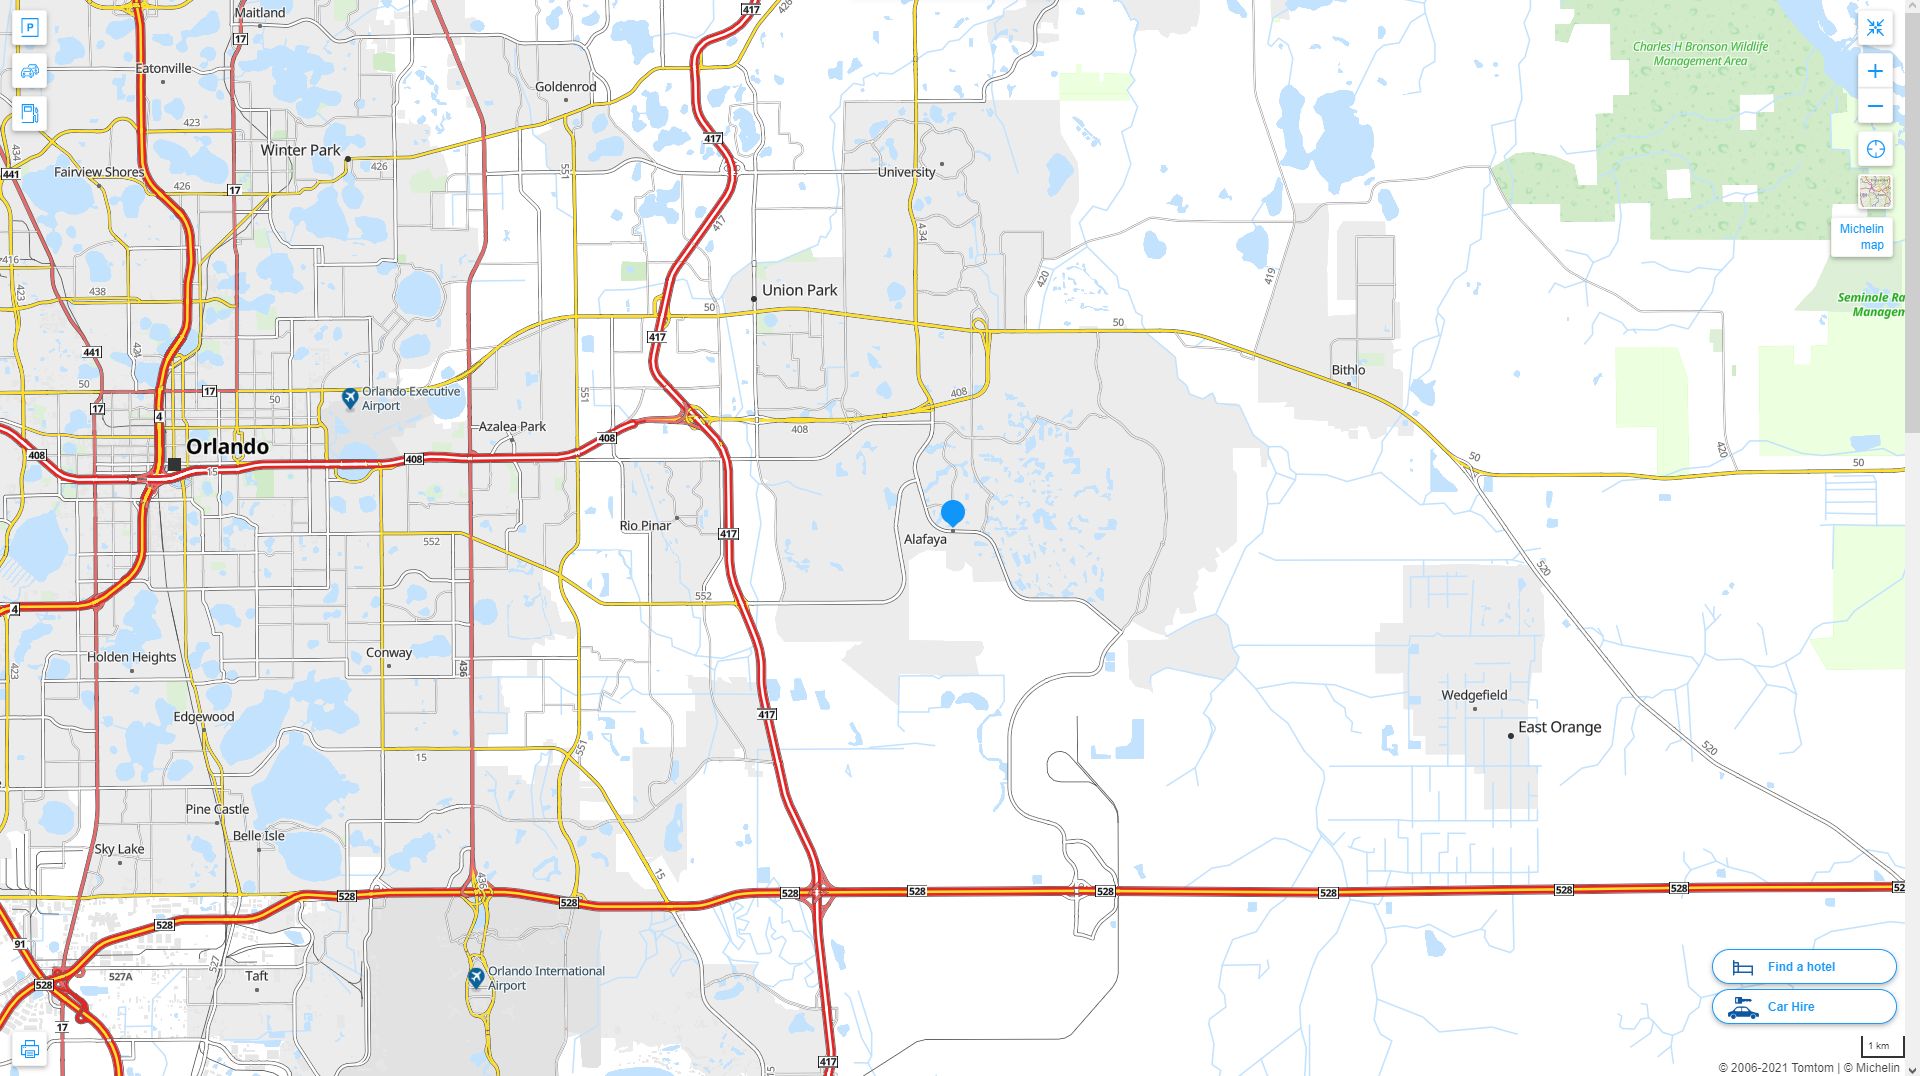 Alafaya Florida Highway and Road Map